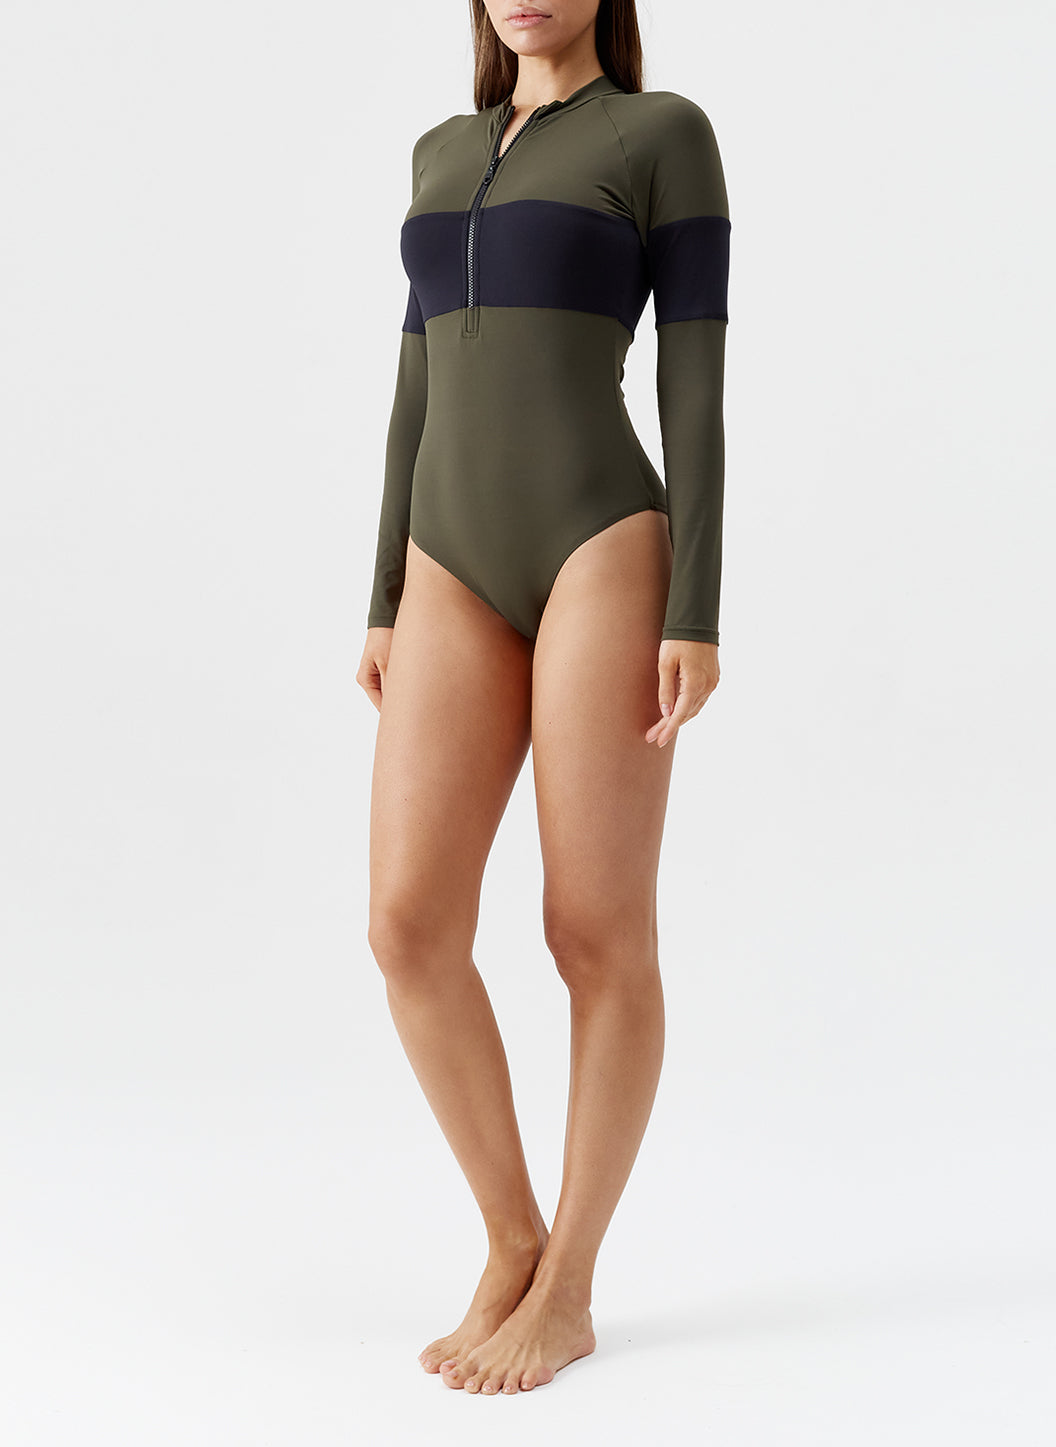 Sandiego_olive_swimsuit_model_2024_F